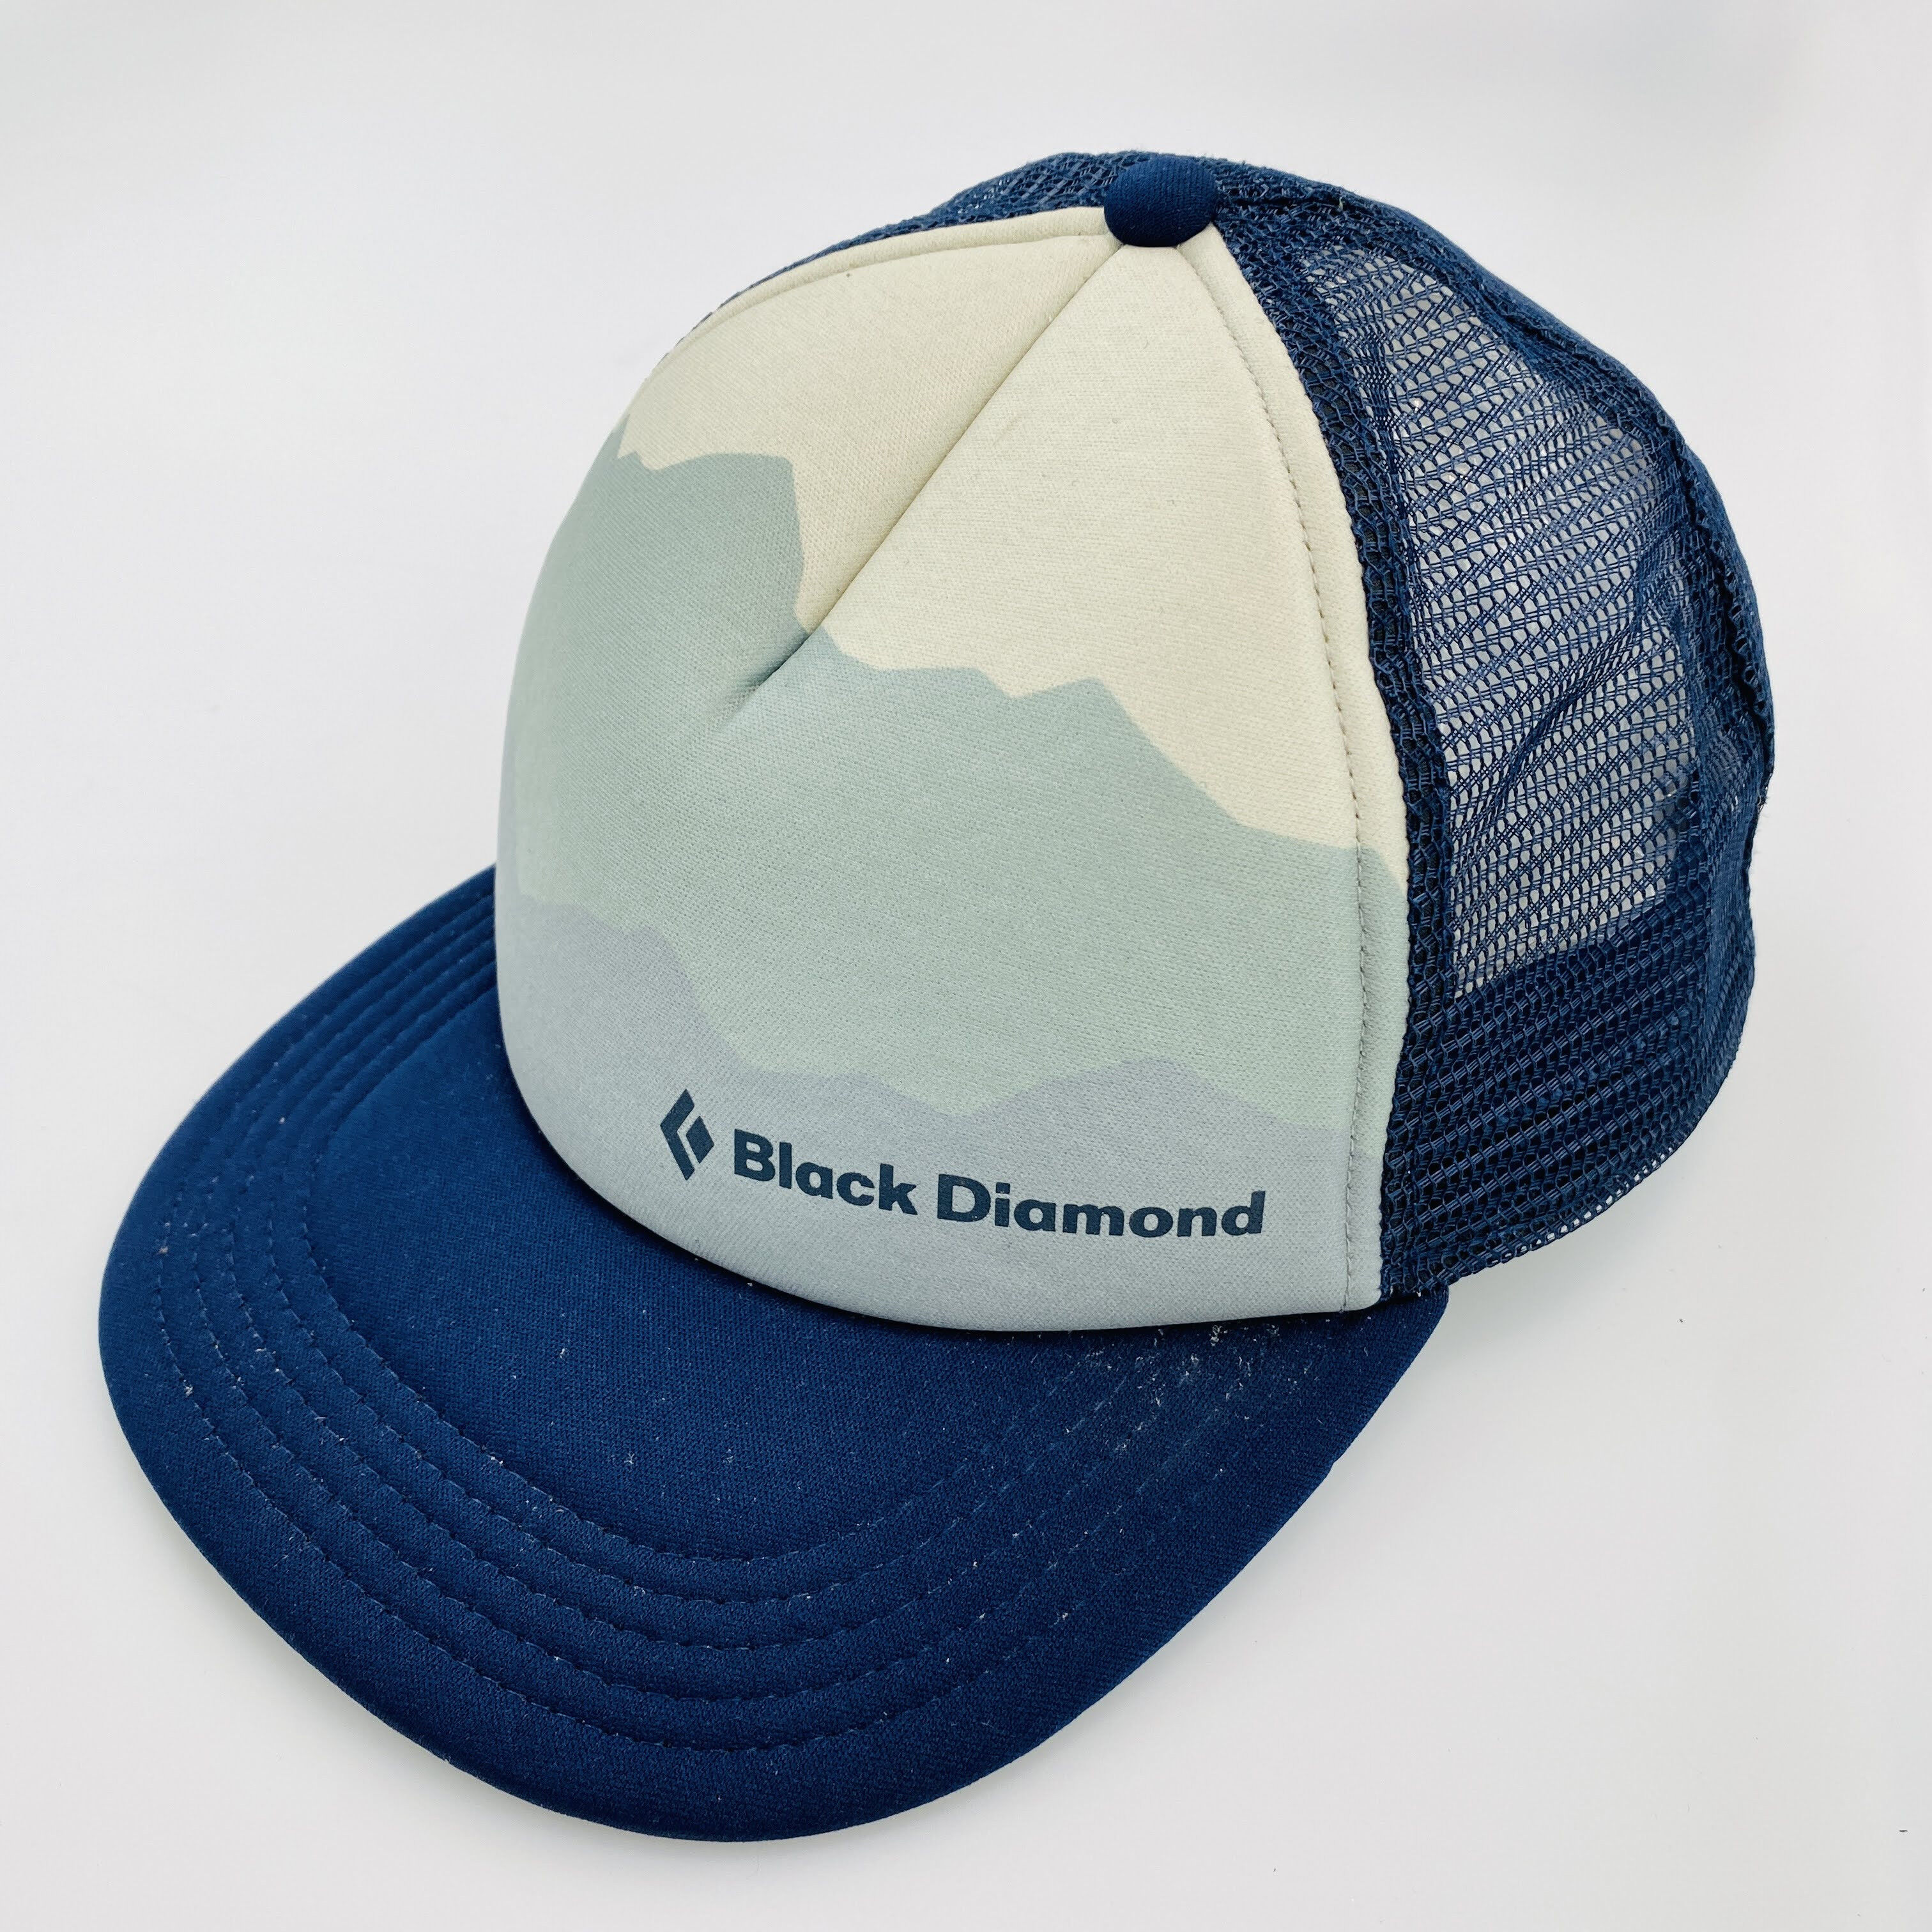 Black Diamond Trucker Hat - Seconde main Casquette femme - Bleu - Taille unique | Hardloop